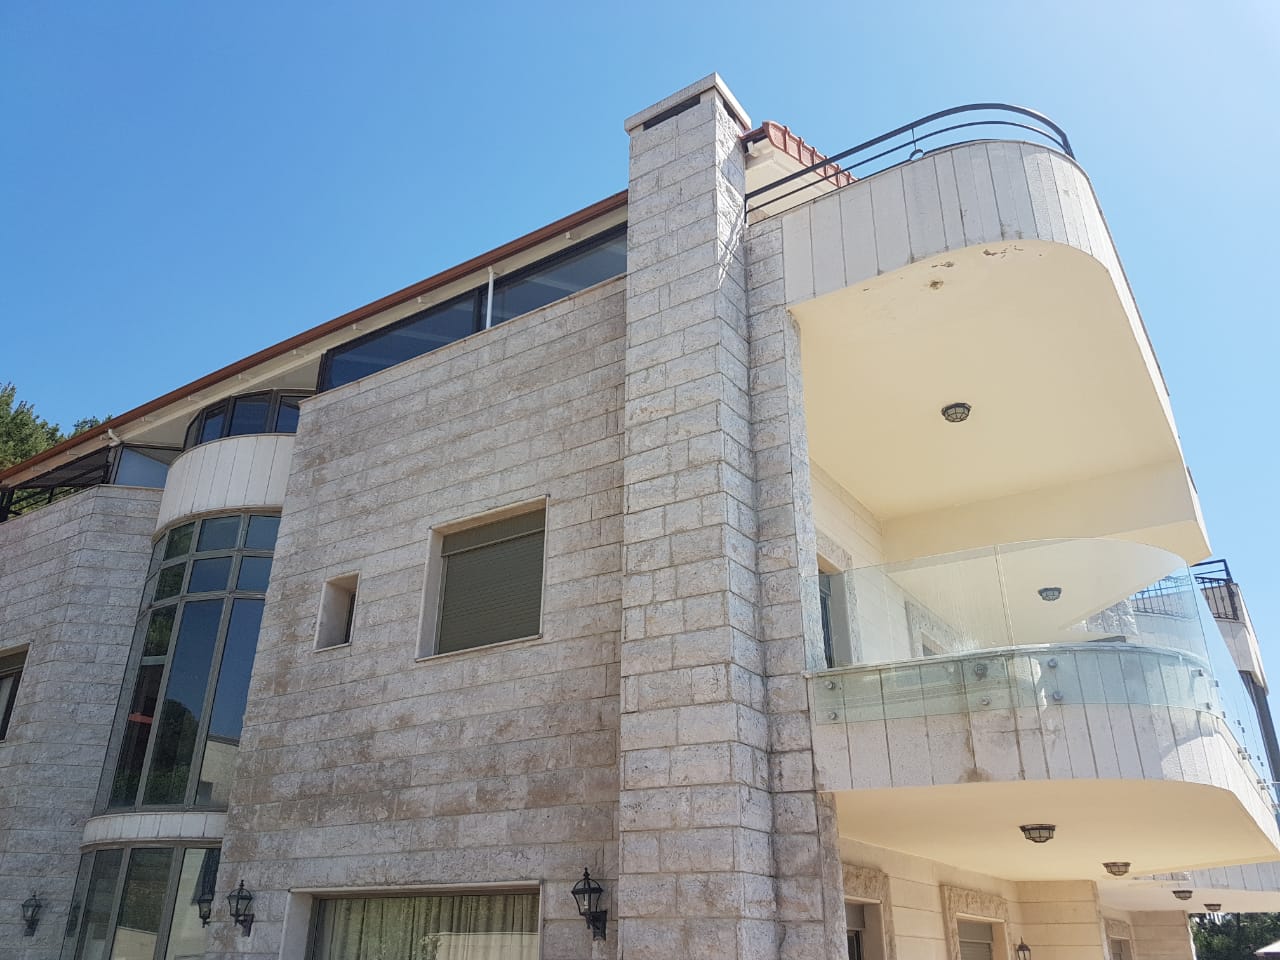 A beautiful villa for sale in harissa, Keserwan Lebanon, real estate in jounieh Lebanon, buy sell properties in jounieh harissa lebanon